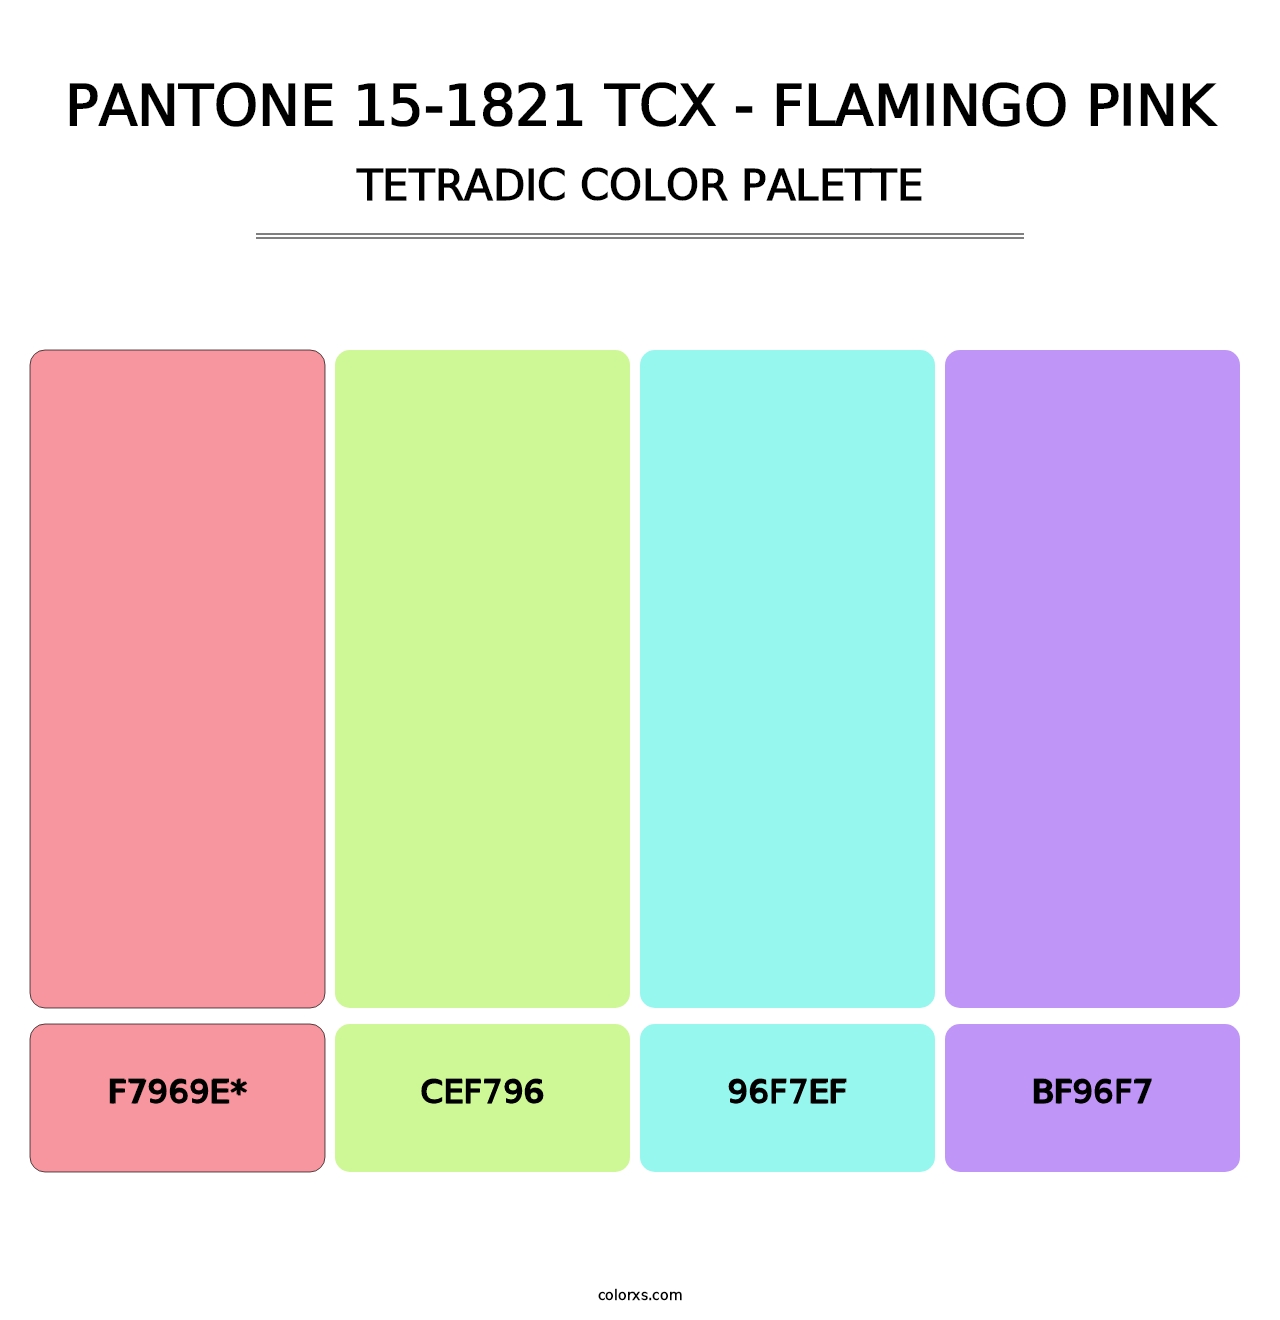 PANTONE 15-1821 TCX - Flamingo Pink - Tetradic Color Palette